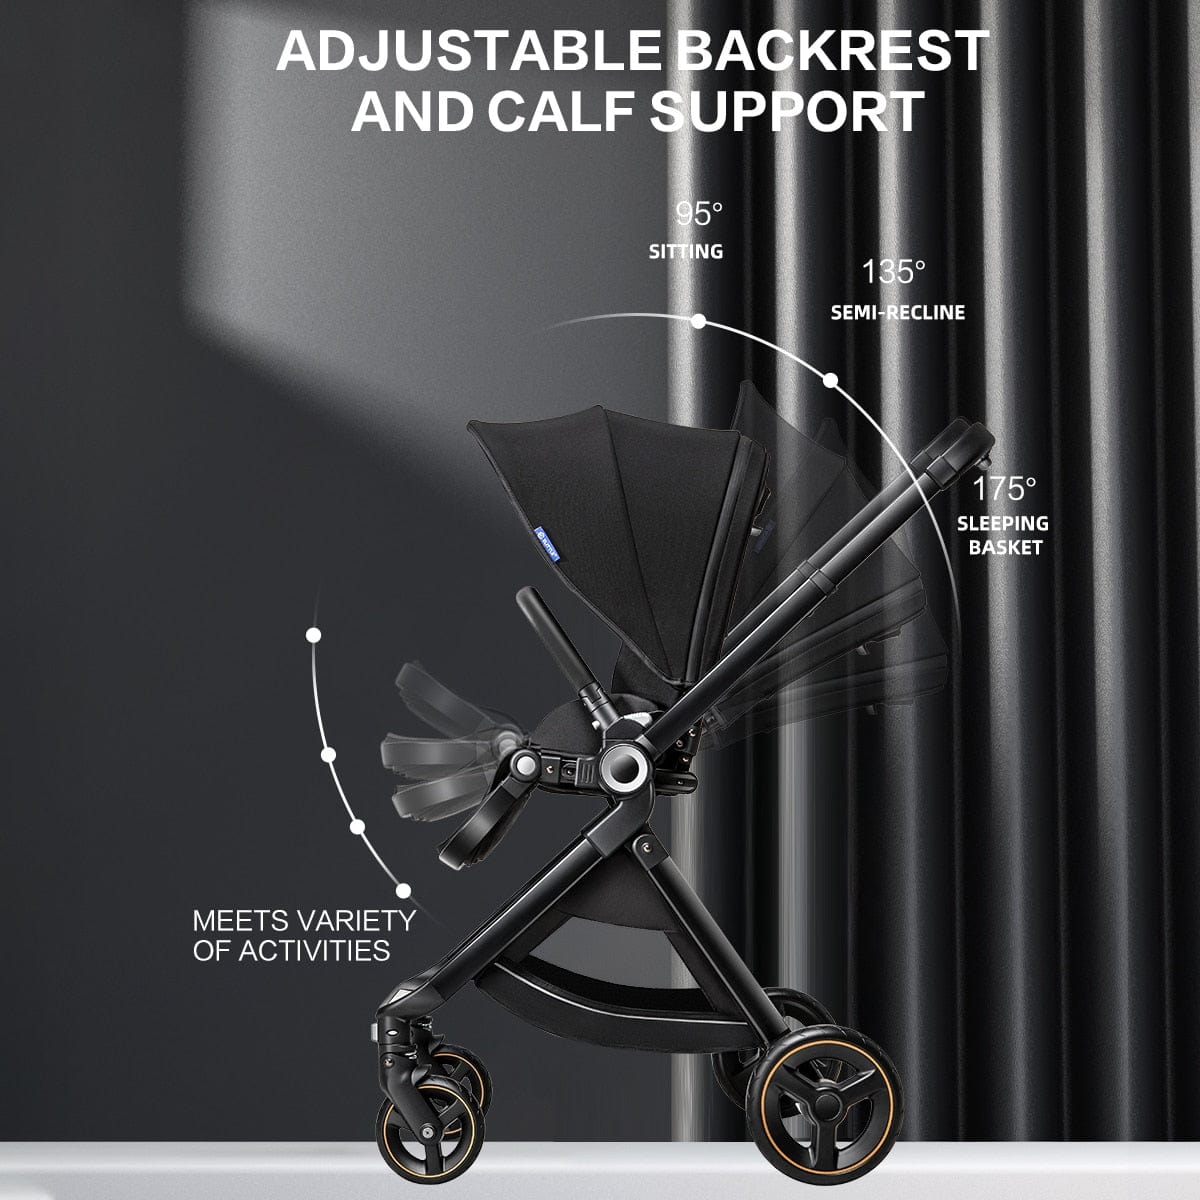  Baby Stroller, ELITTLE EMU Foldable Toddler Stroller